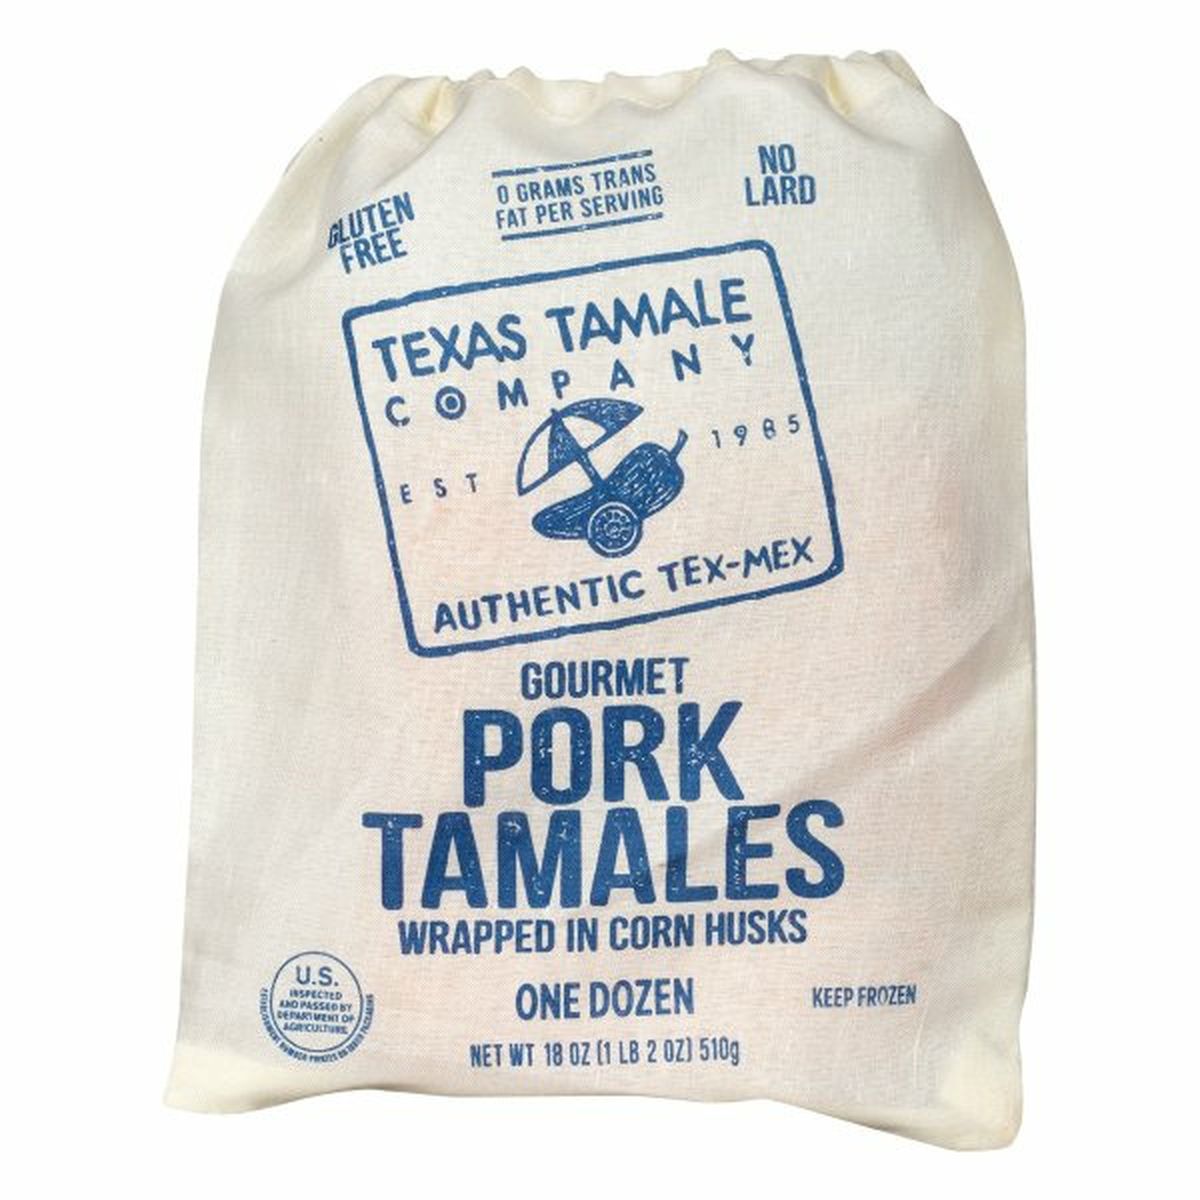 Calories in Texas Tamale Company Tamales, Gourmet, Pork